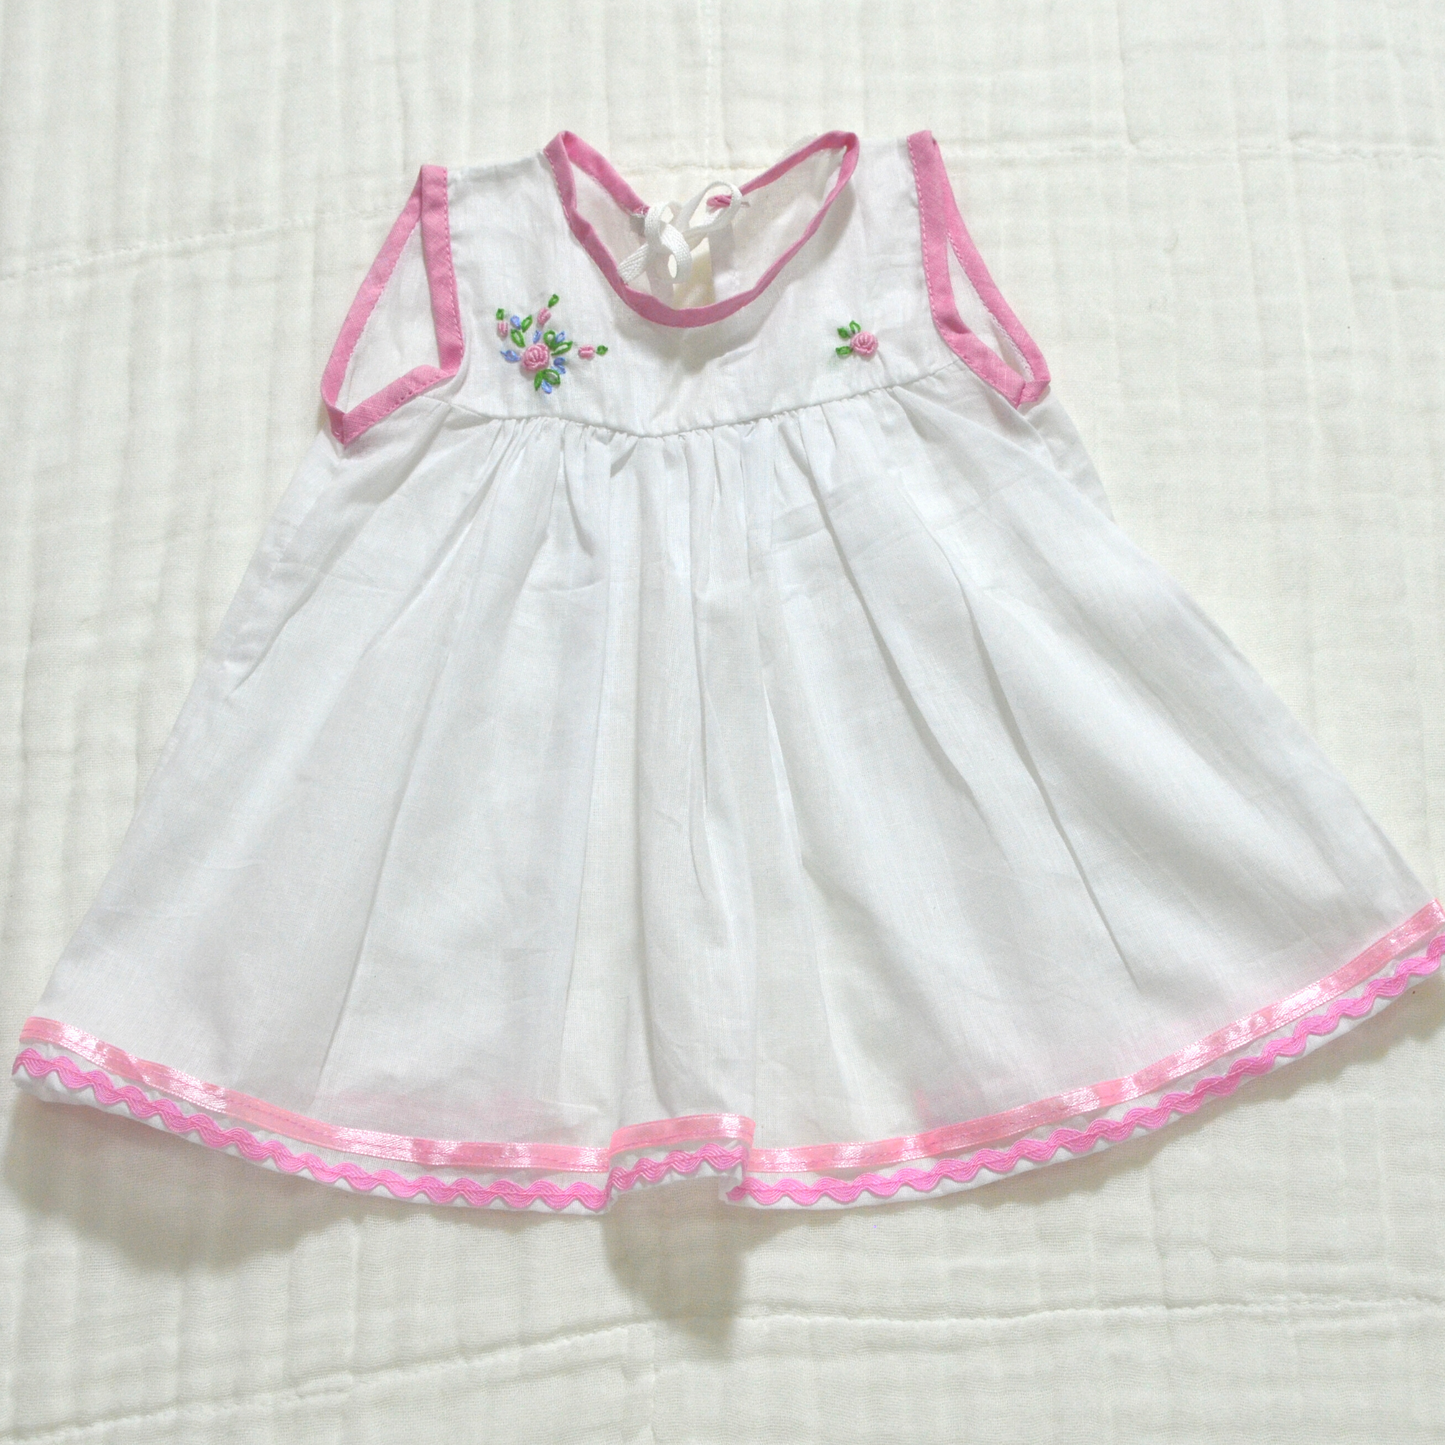 Handmade Baby Dress - Muslin 0 to 3 month